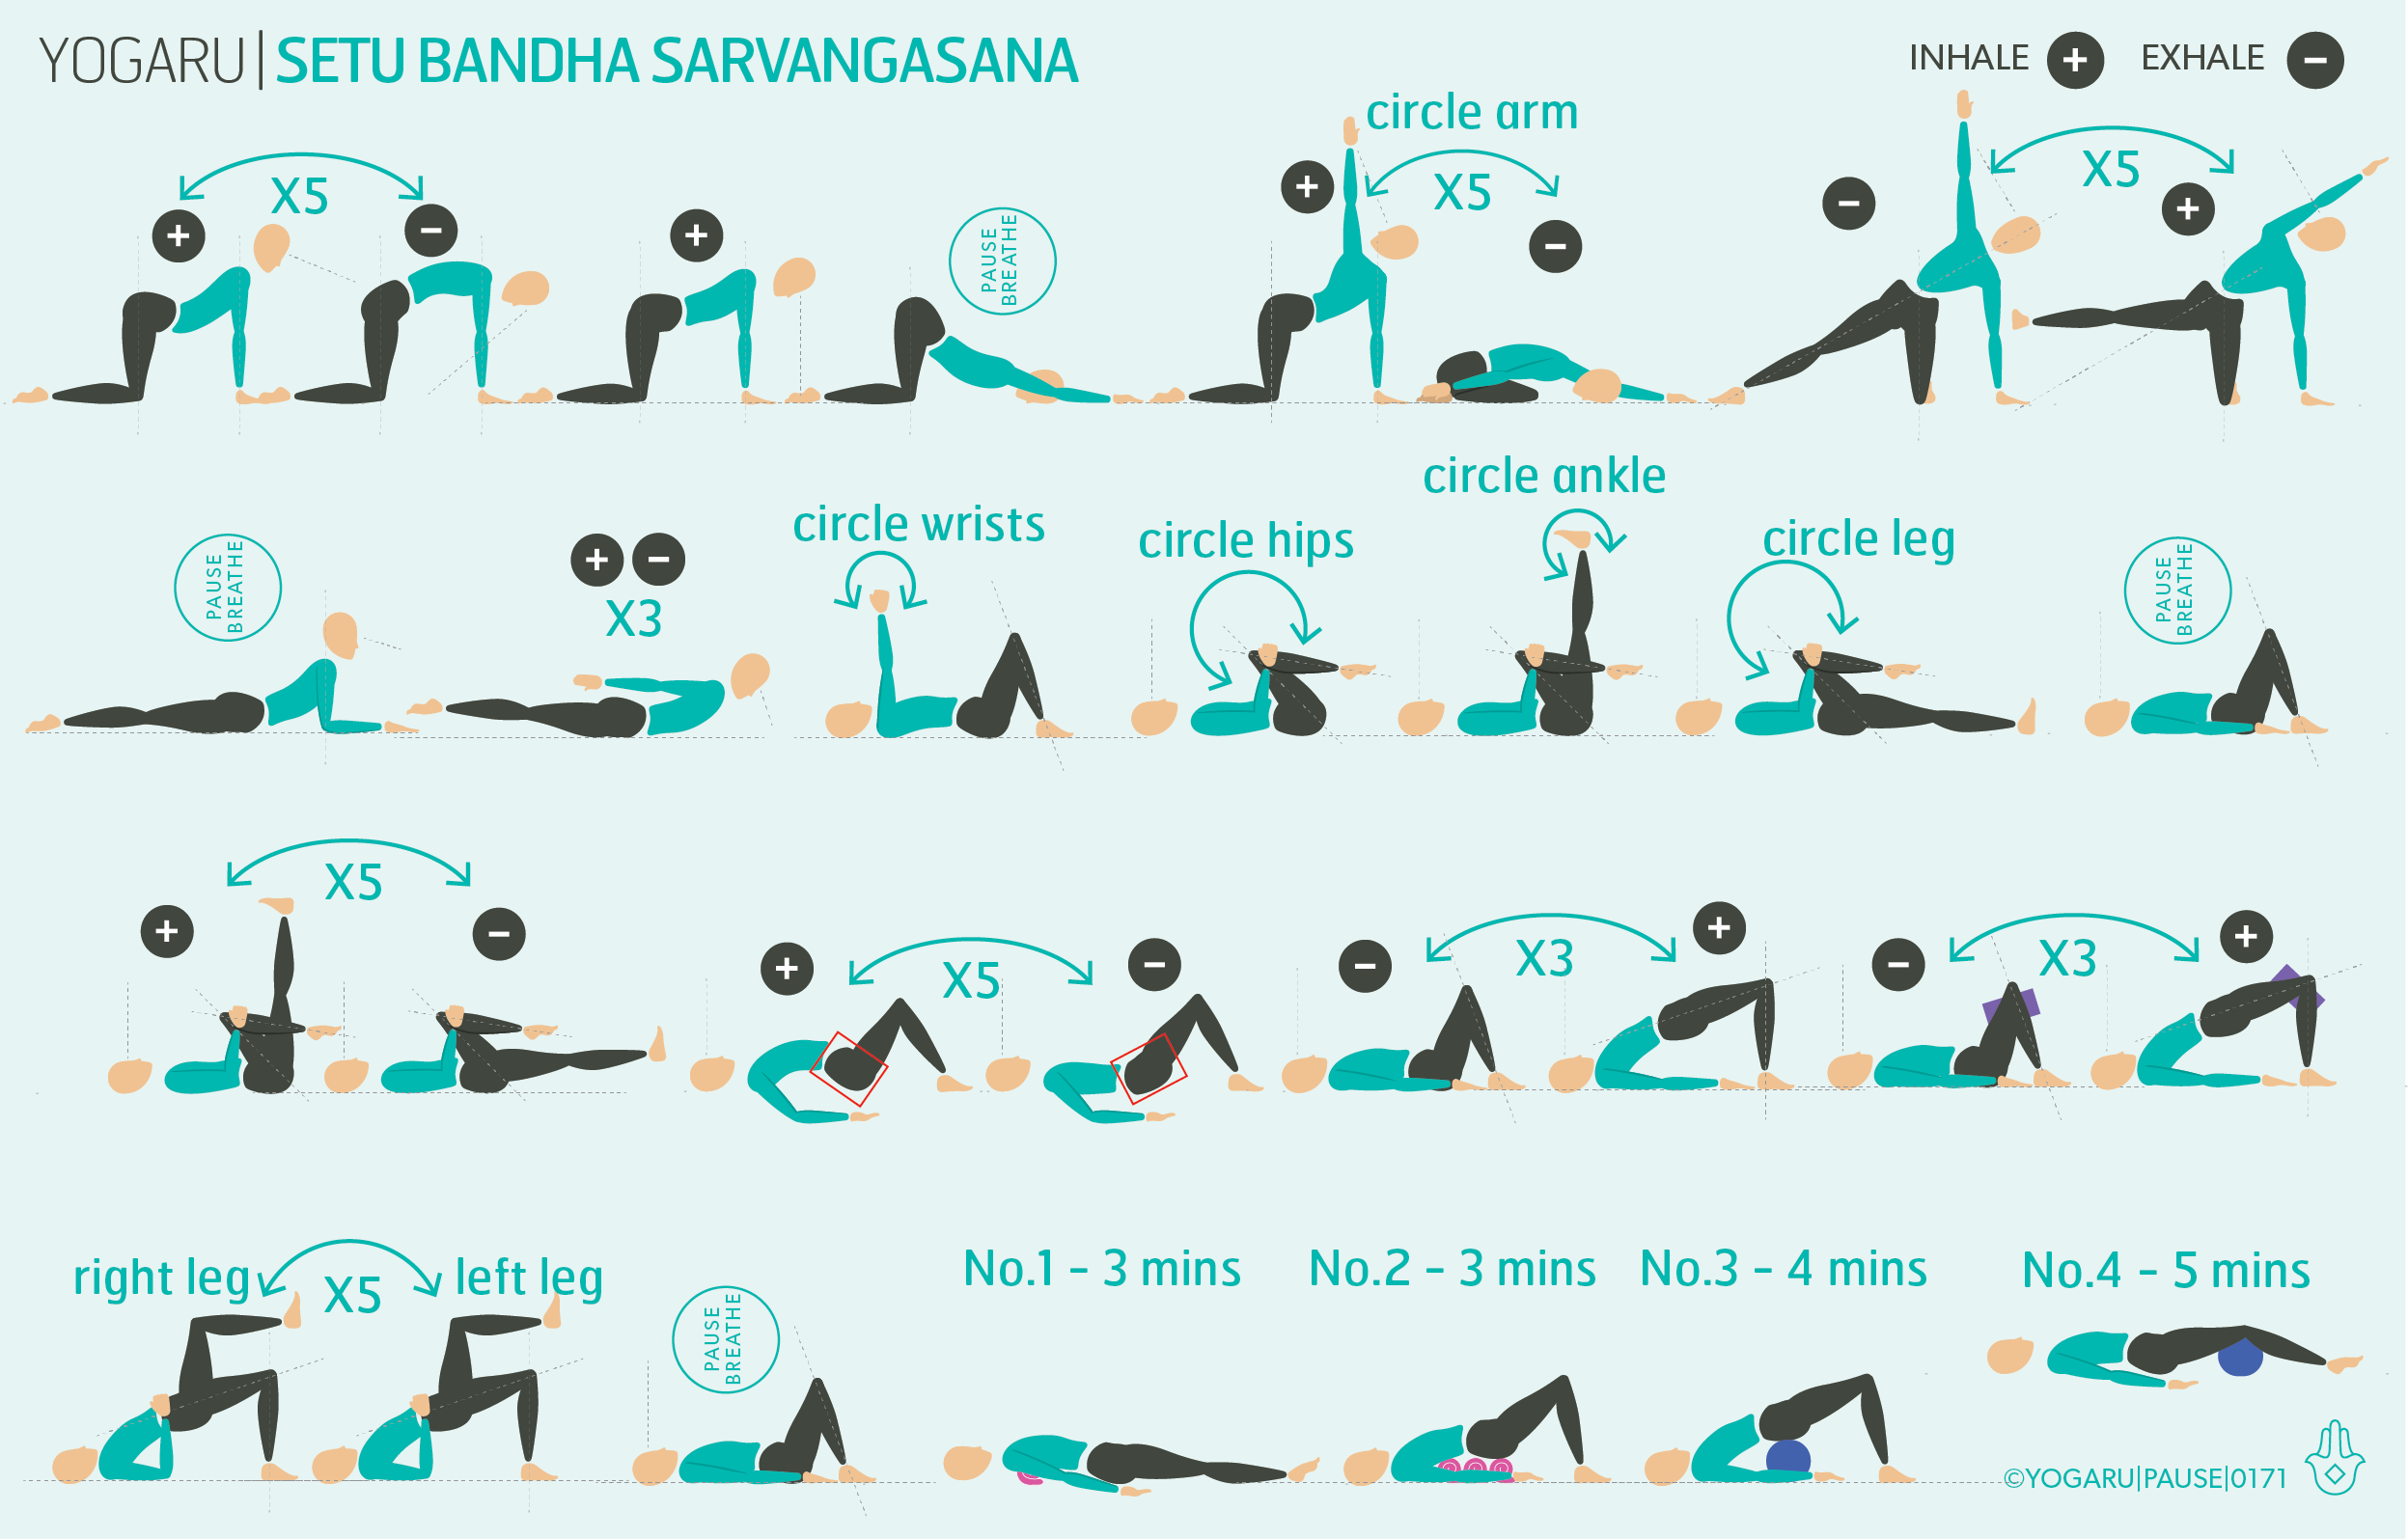 Setu Bandhasana Pose Steps and Benefits - Rishikesh Yogis Yogshala